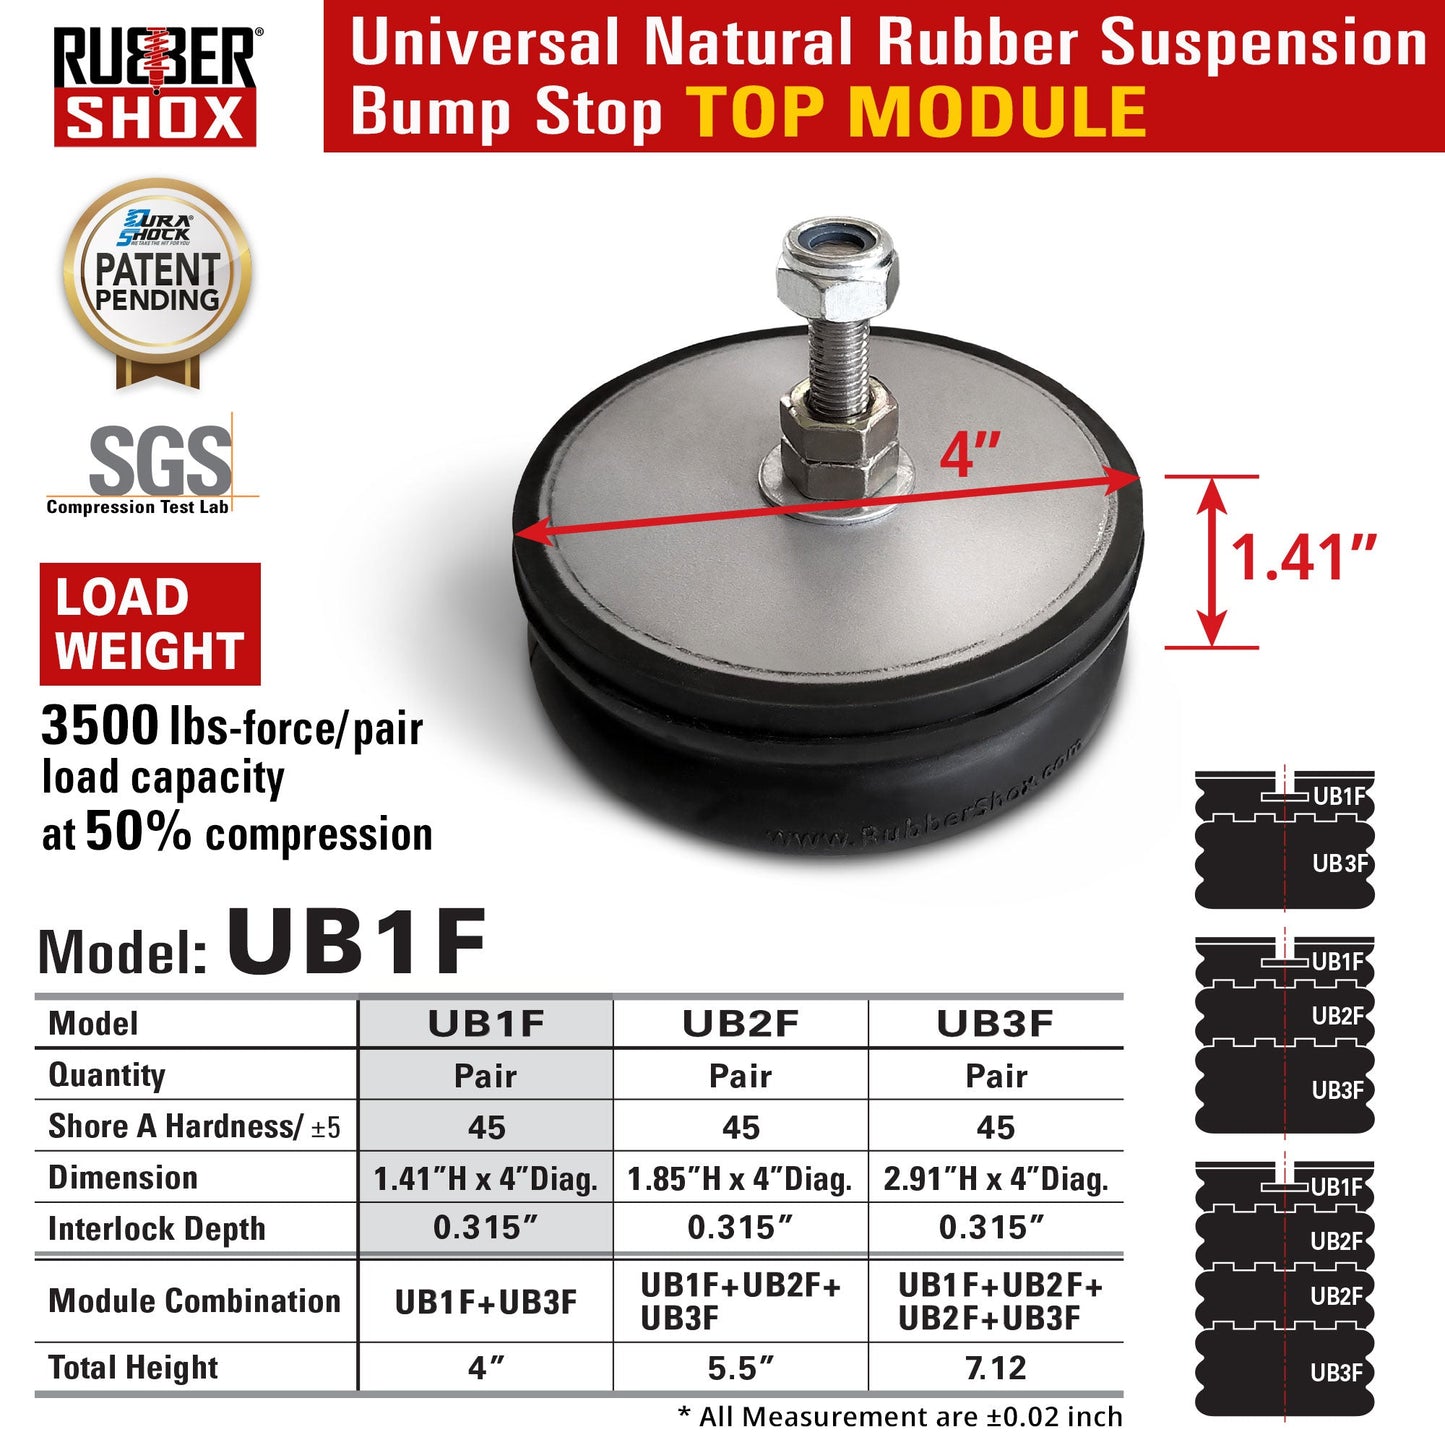 Modular Universal Natural Rubber Suspension Bump Stop - TOP Module (Set of 2)